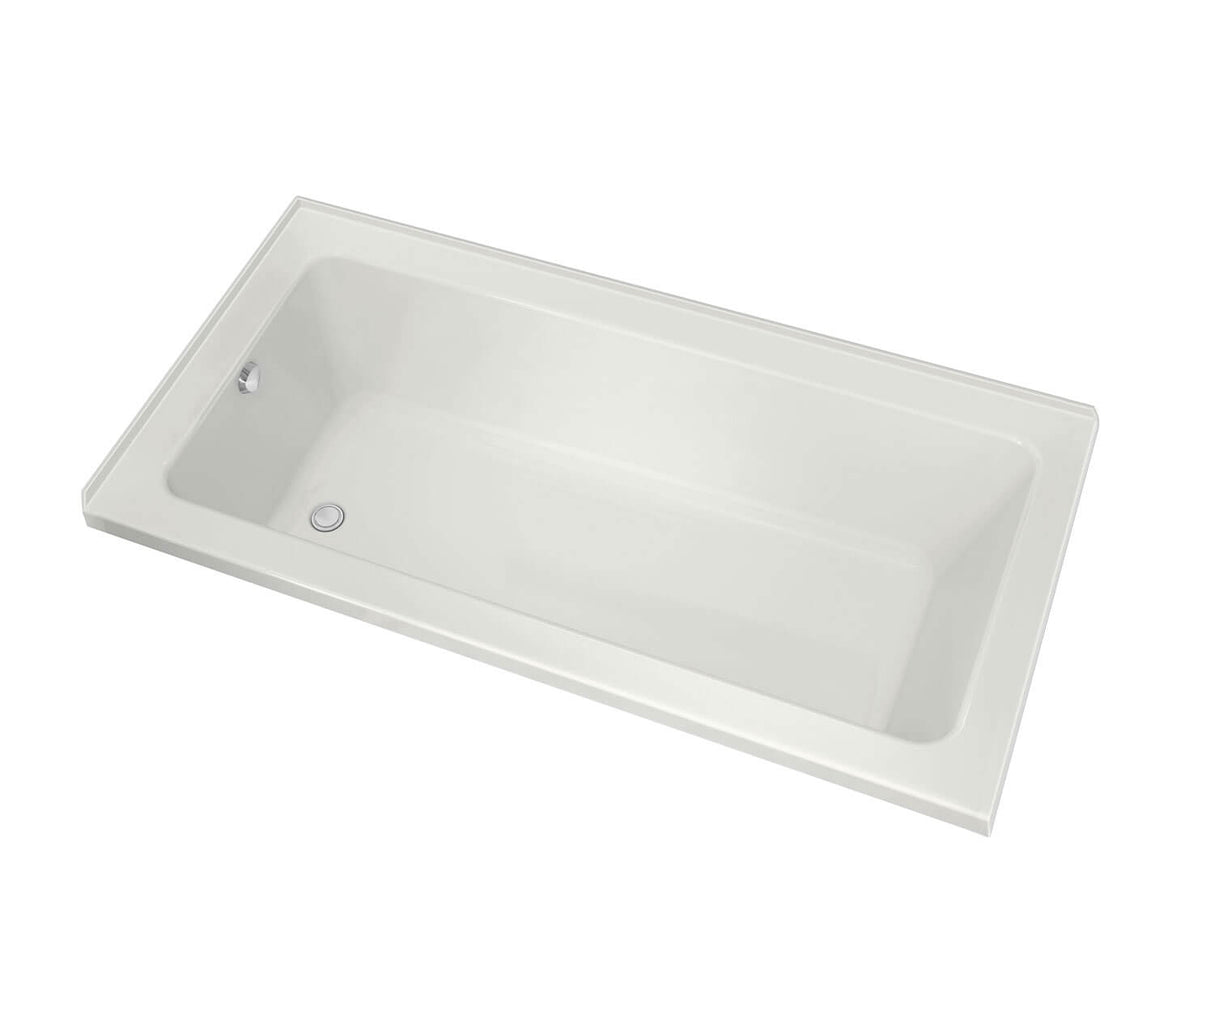 MAAX 106202-L-097-001 Pose 6032 IF Acrylic Corner Left Left-Hand Drain Combined Whirlpool & Aeroeffect Bathtub in White